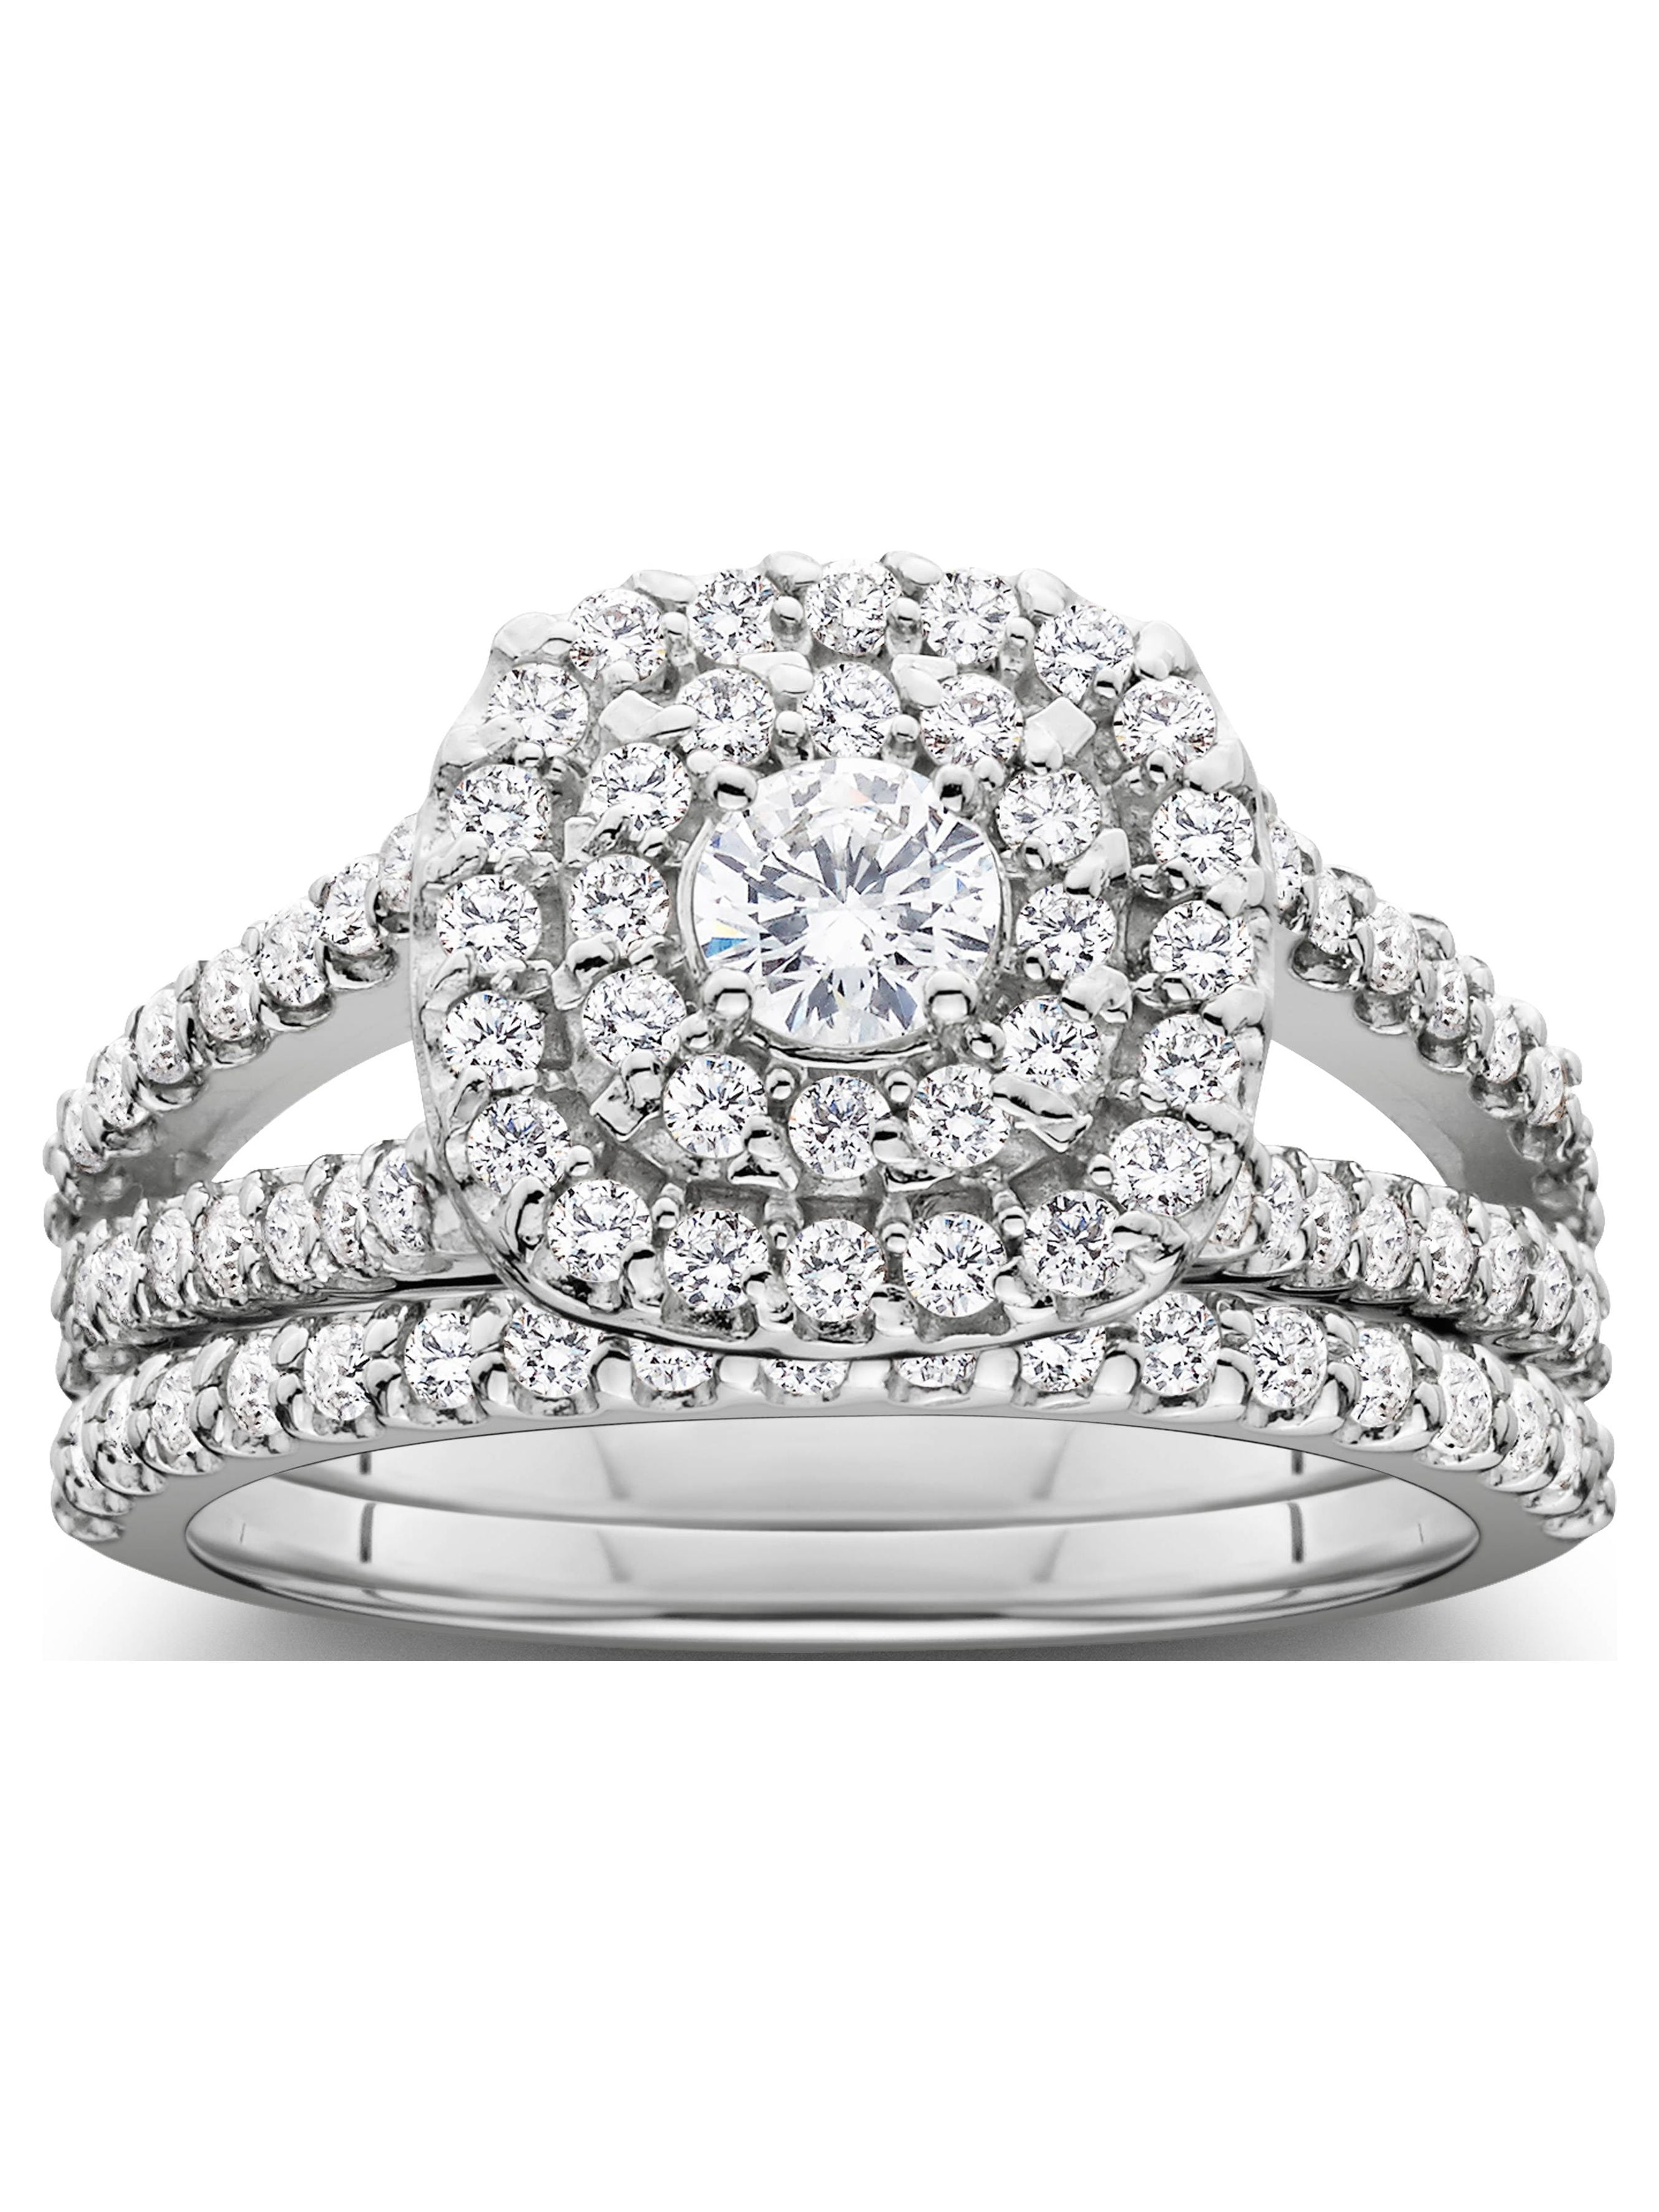 PT850 1ct Diamond Jewelry Ring 1.0ct